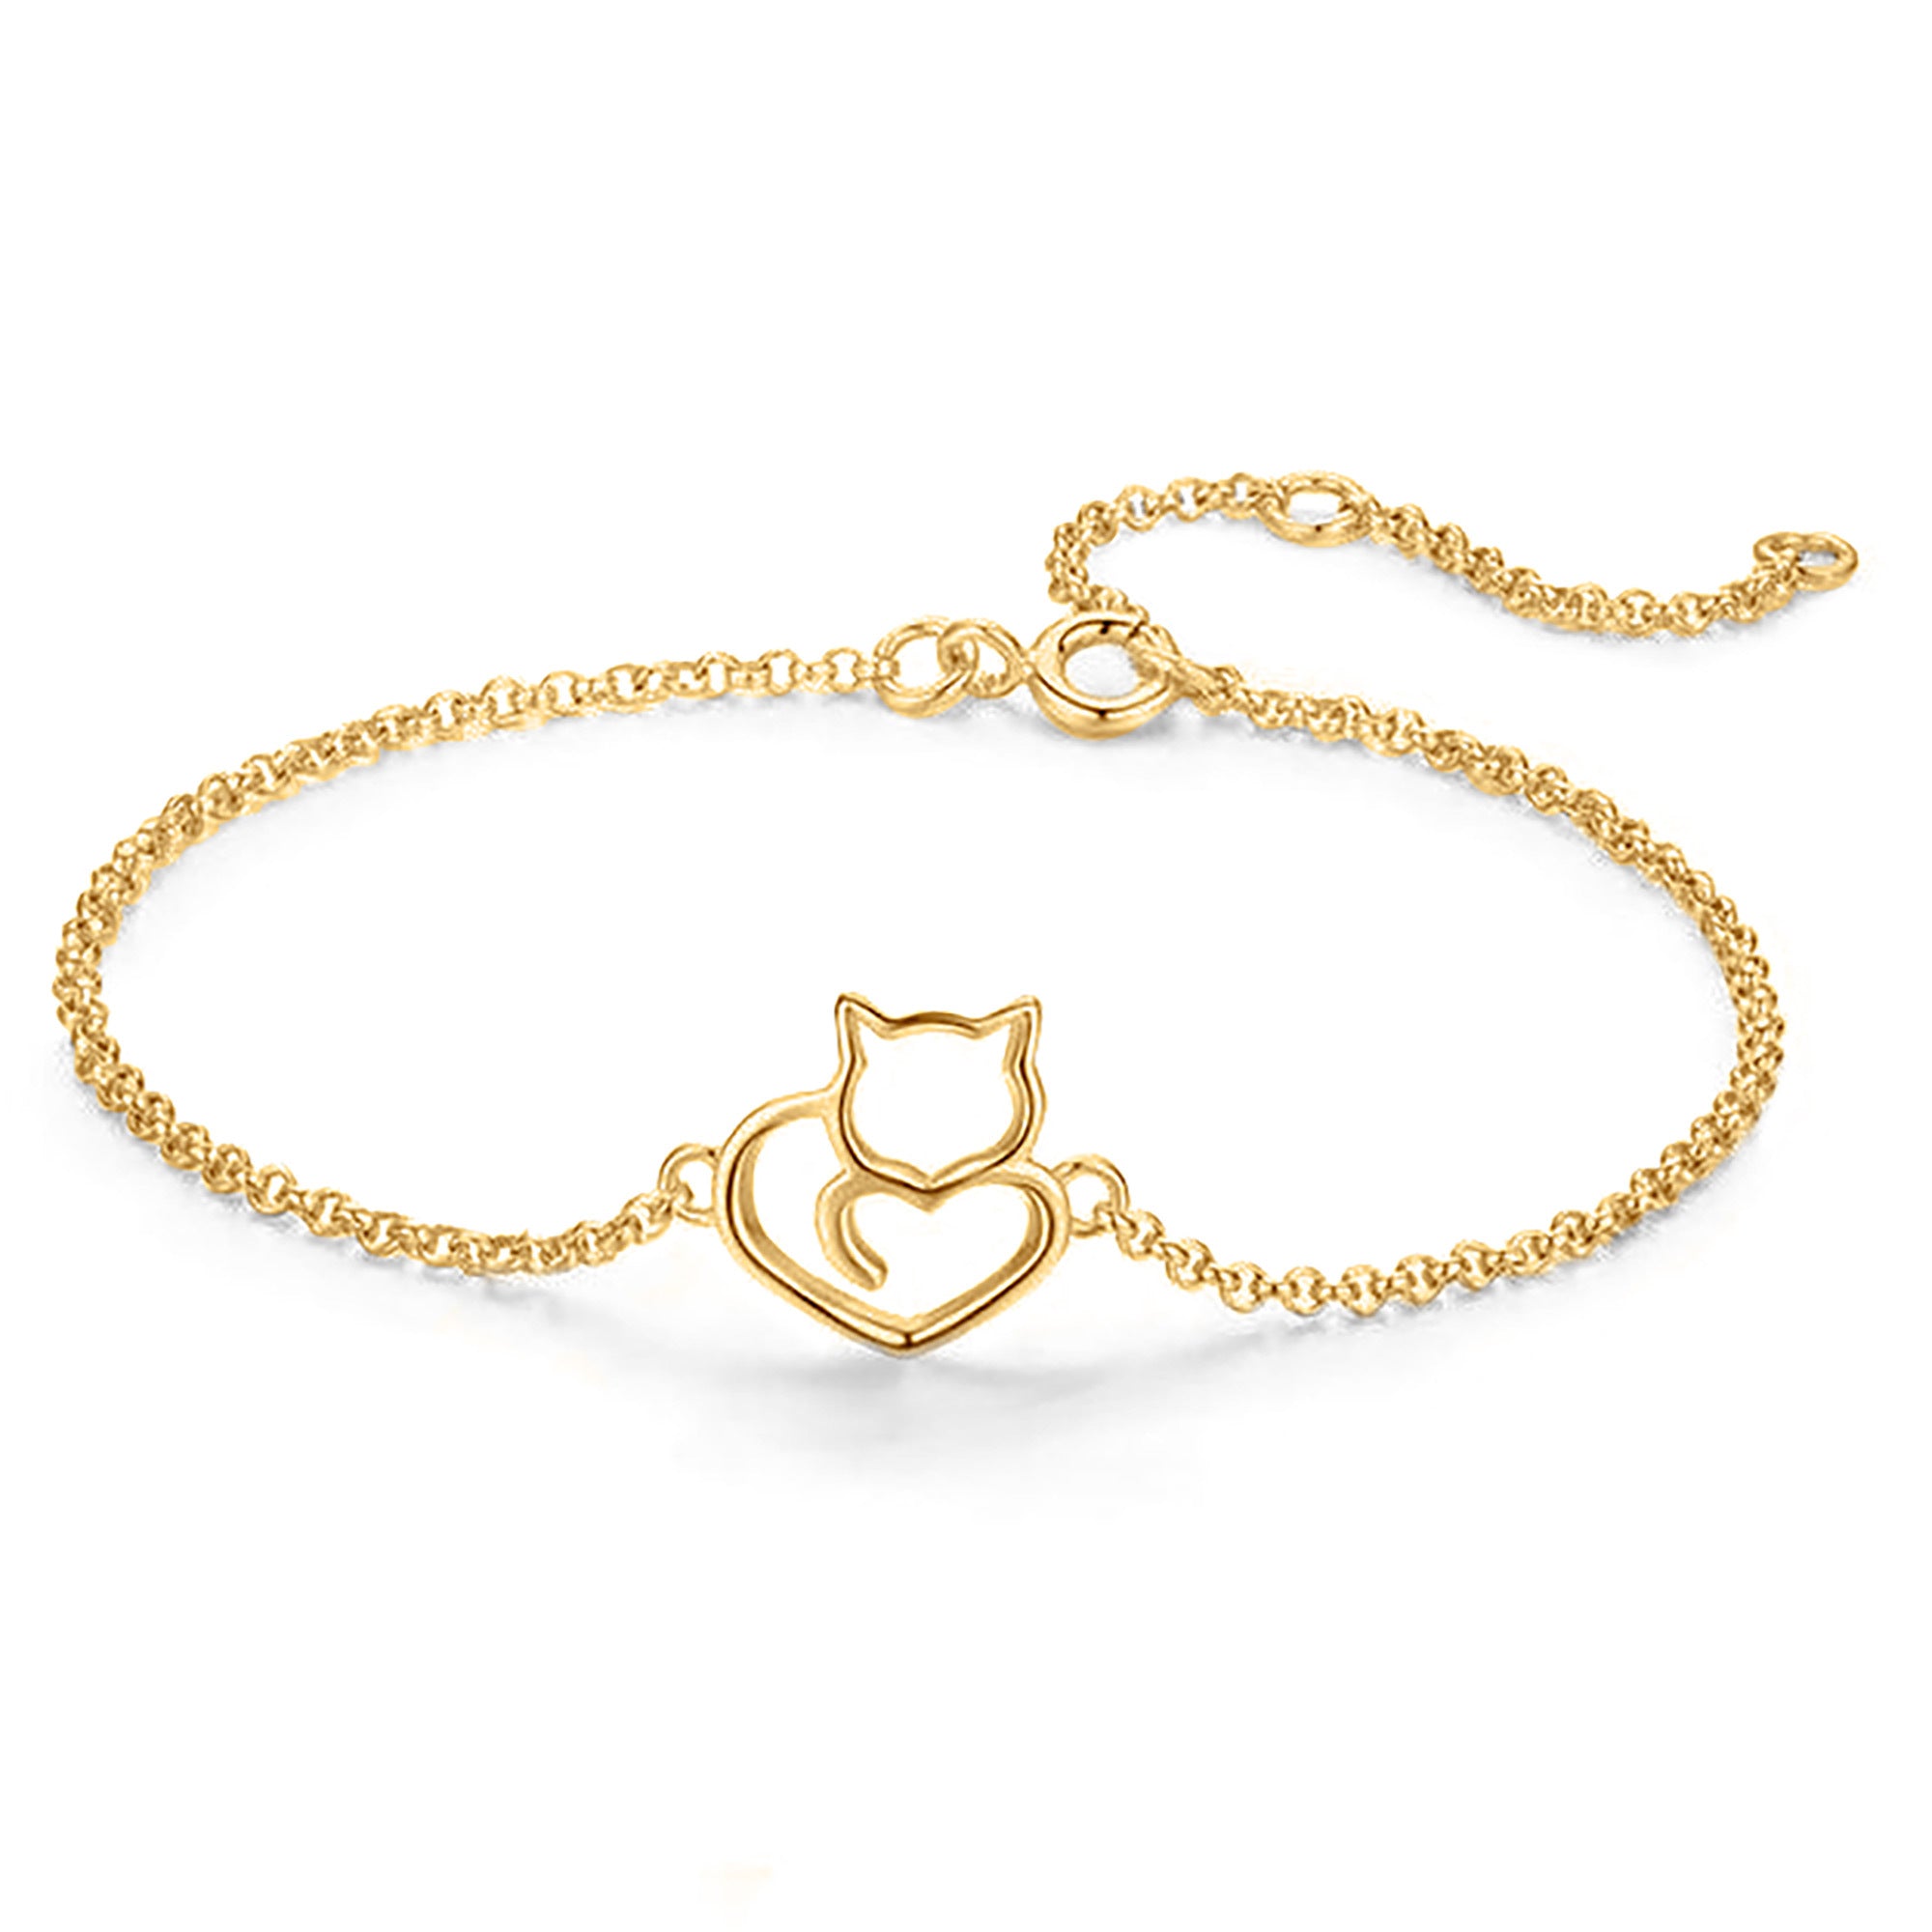 AED 68.0 - 24K Gold Plated Adjustable Cat Bracelet - www.duzai-jewelry.com